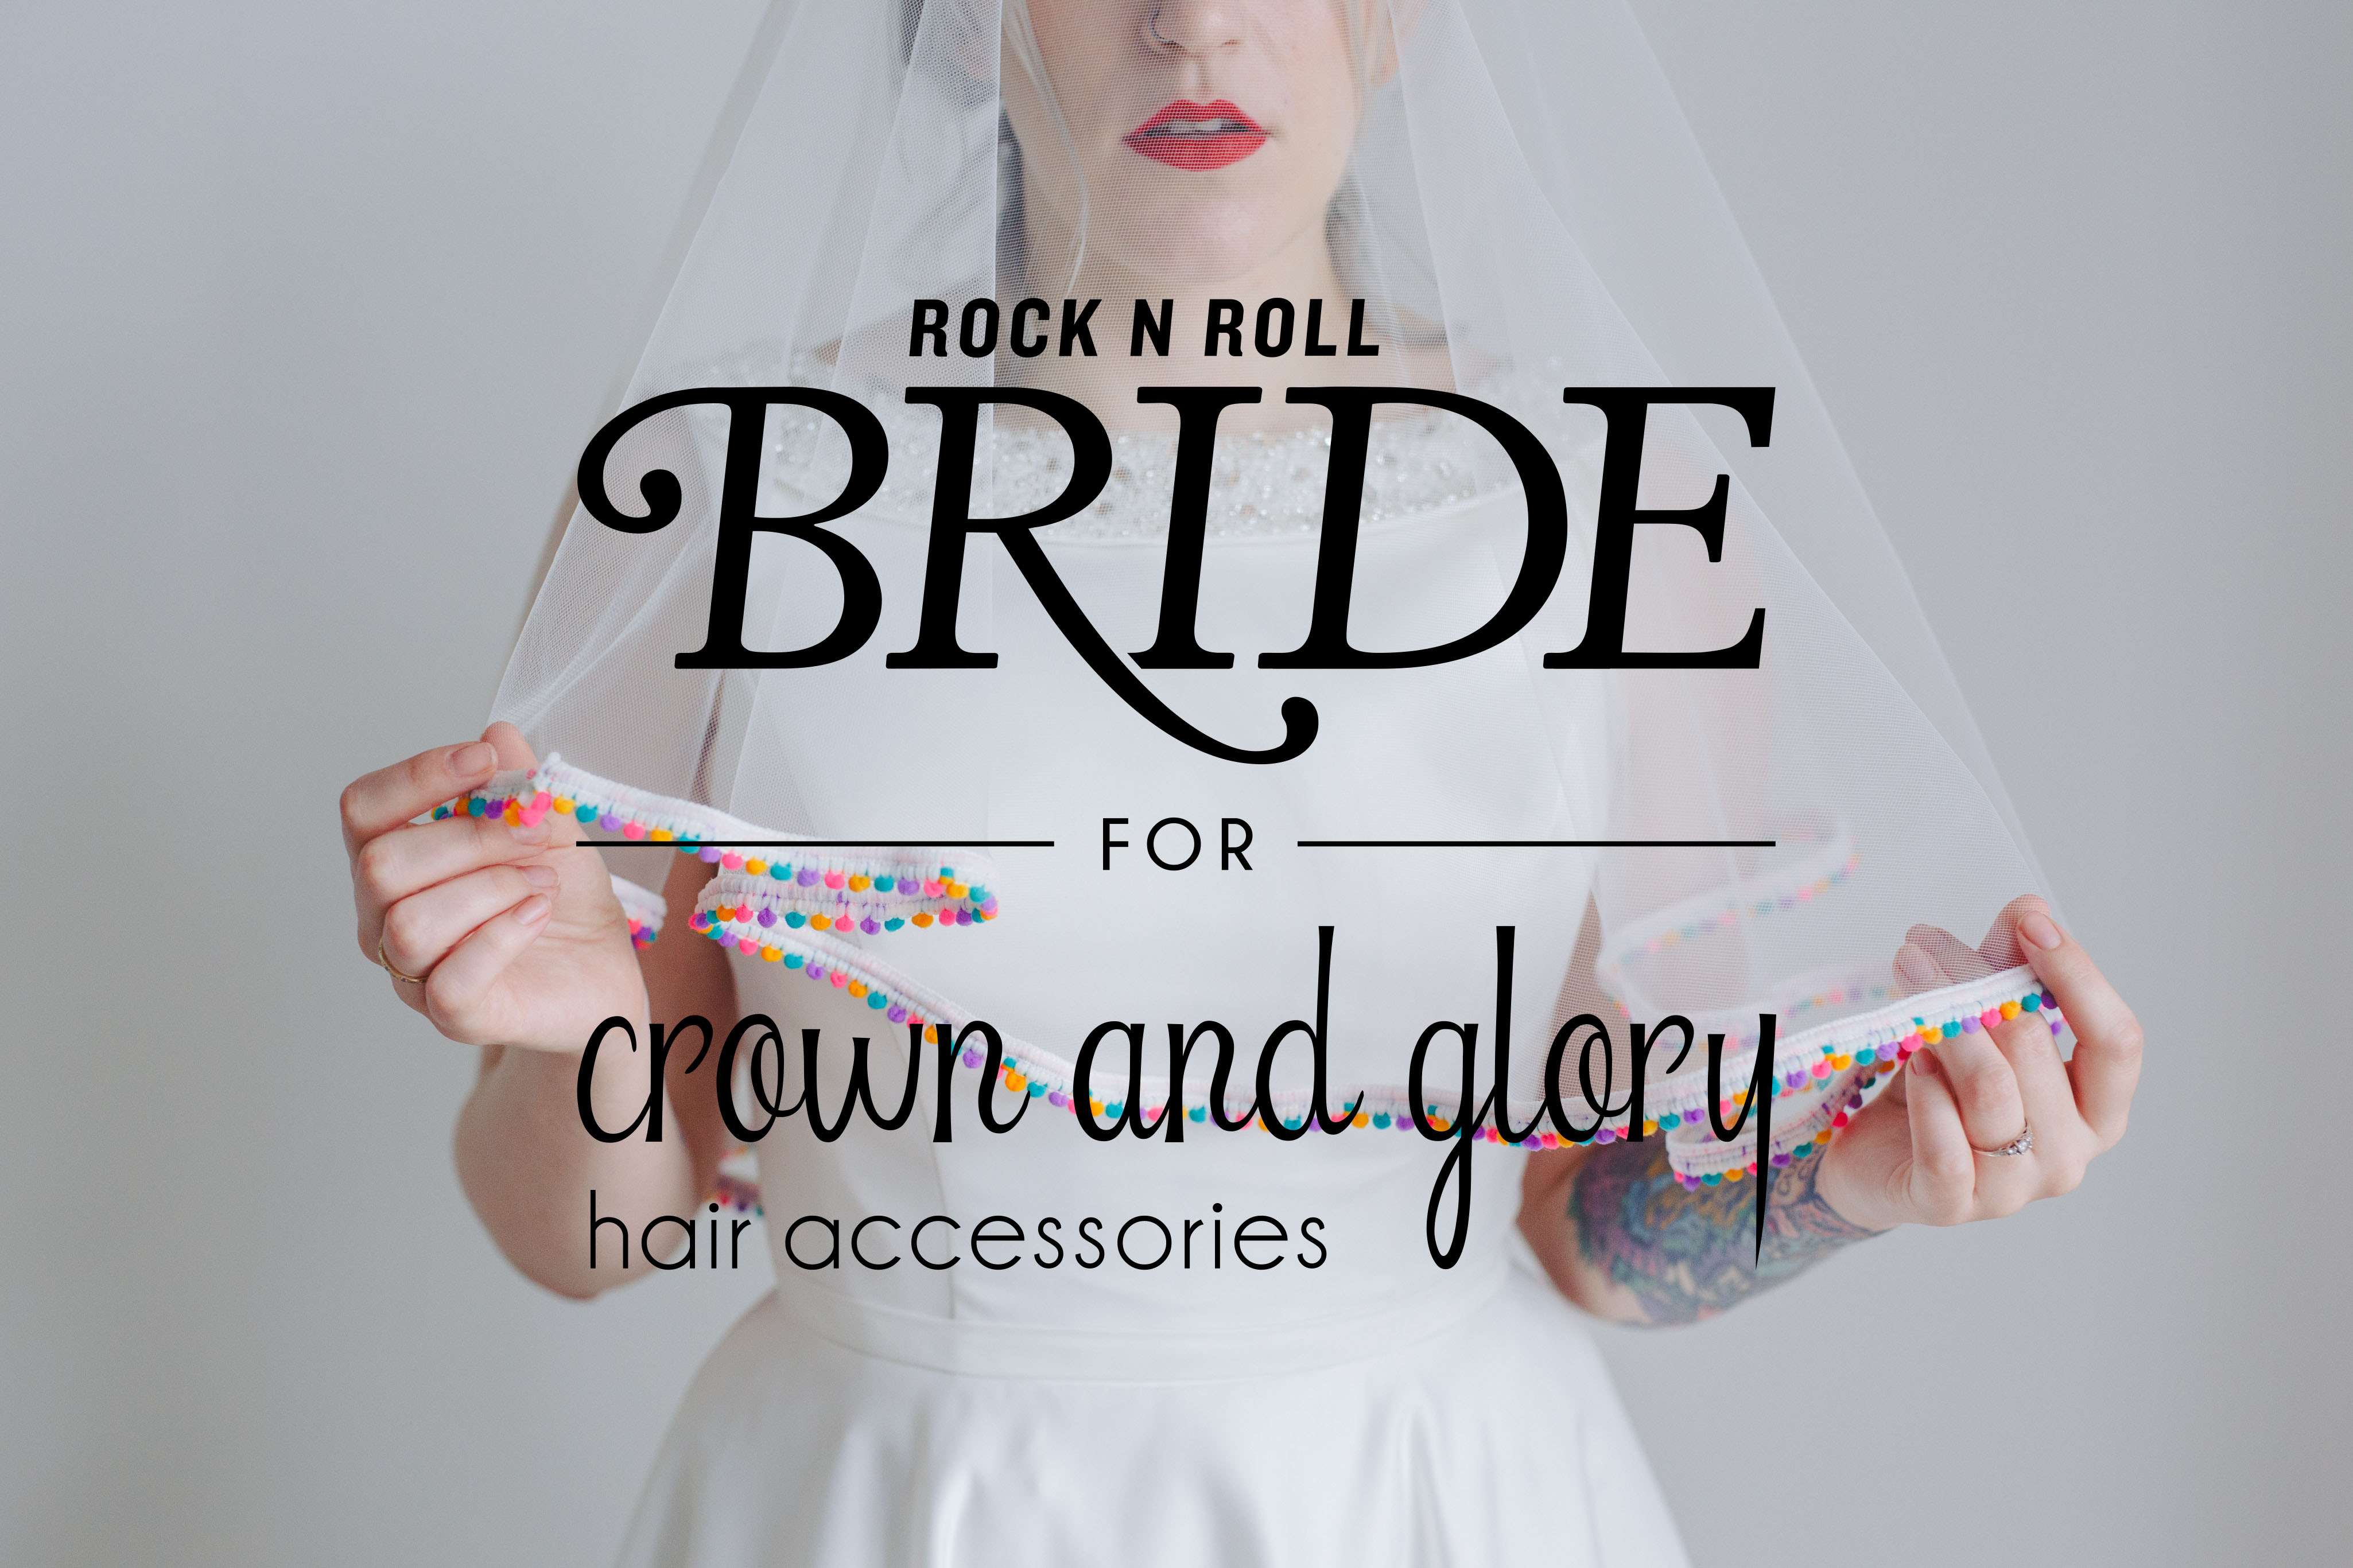 rocknrollbride x crown and glory veils headshot